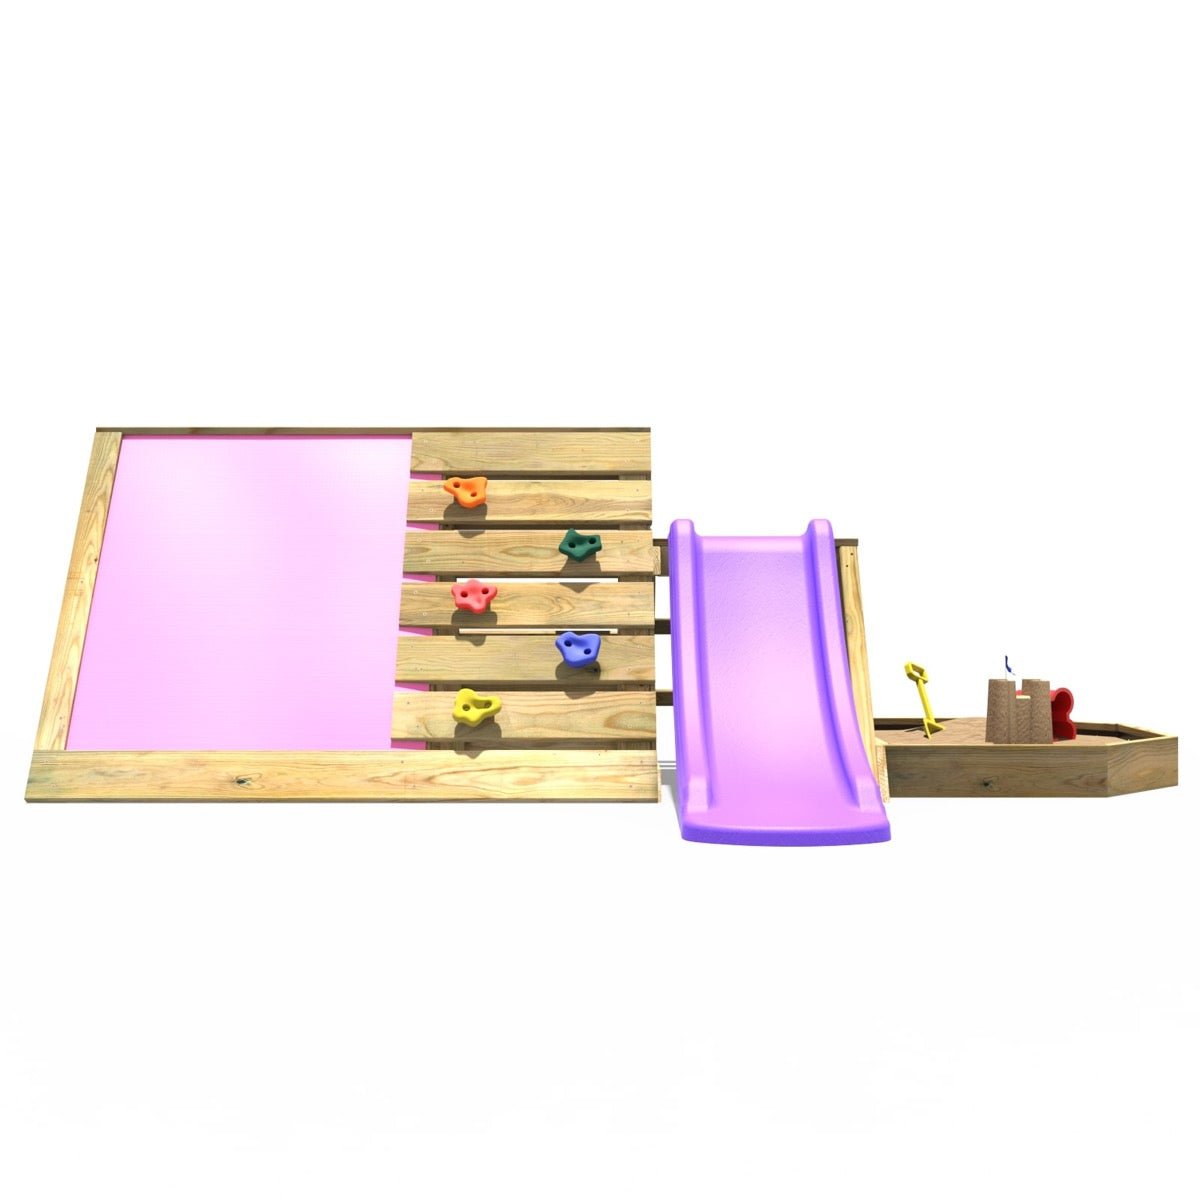 Rebo Mini Wooden Climbing Pyramid Adventure Playset Sandpit, Den & Slide - Pink